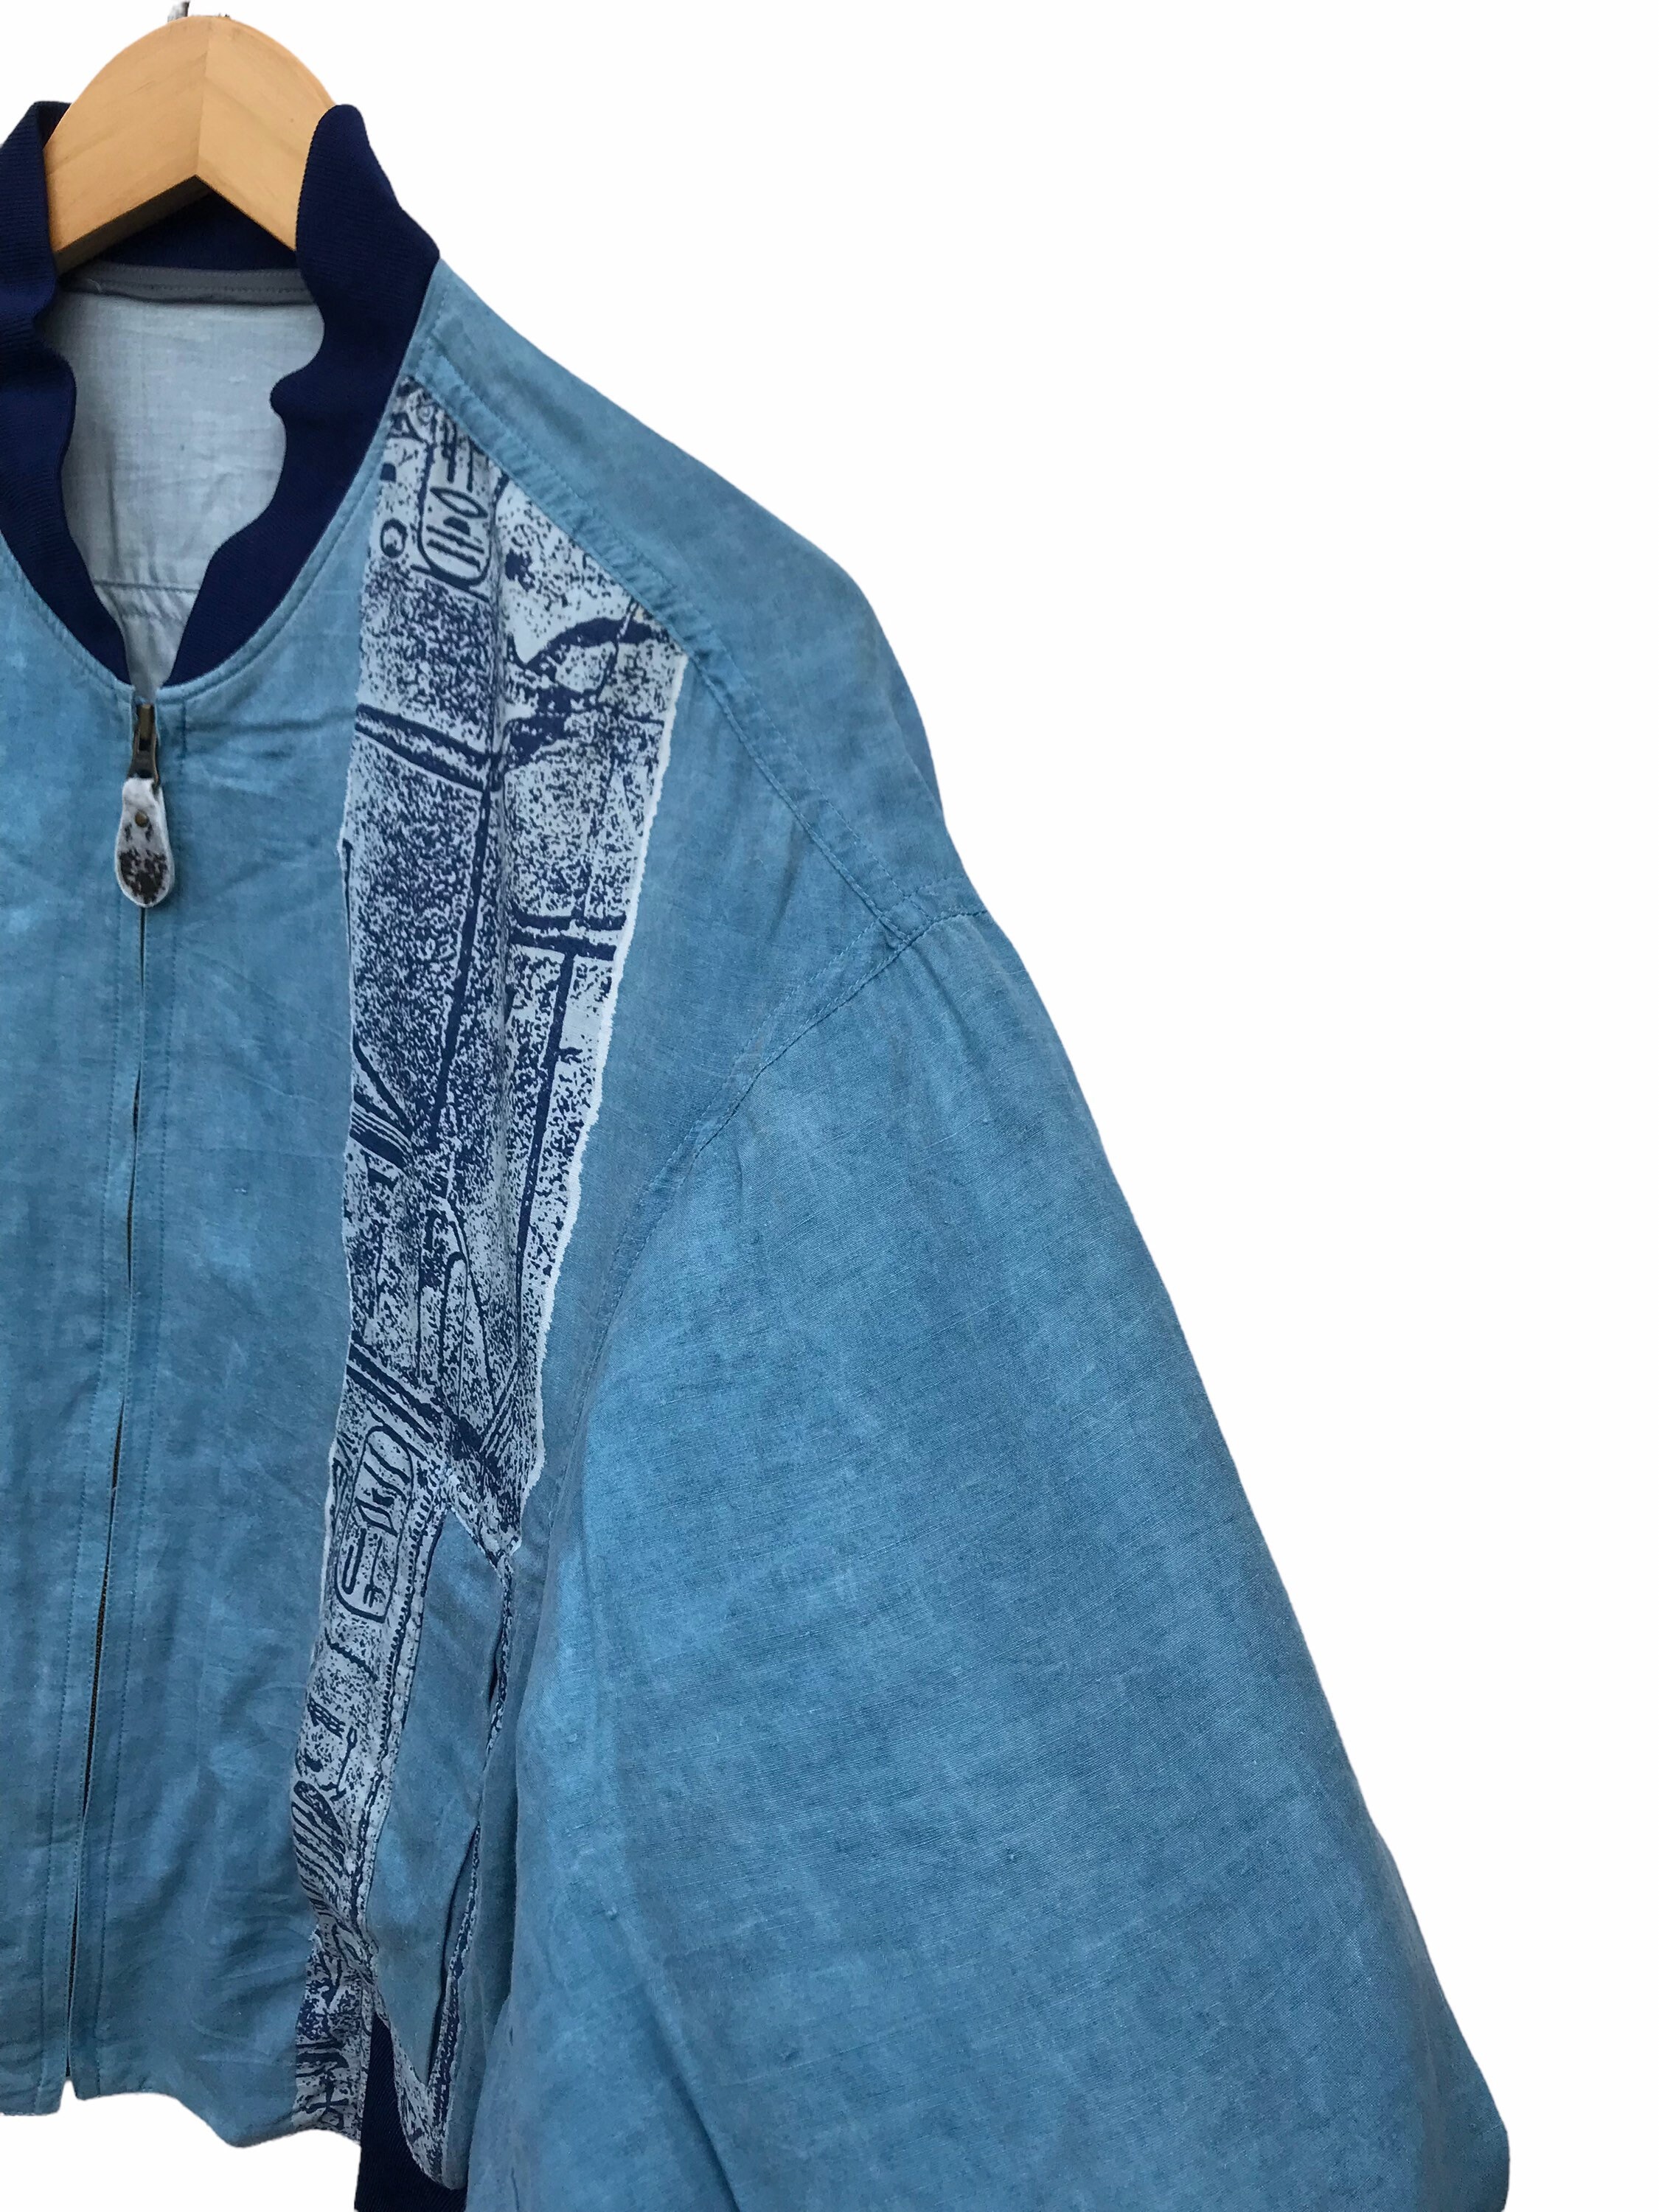 Louis Feraud Vintage Collarless Jacket, $199, farfetch.com